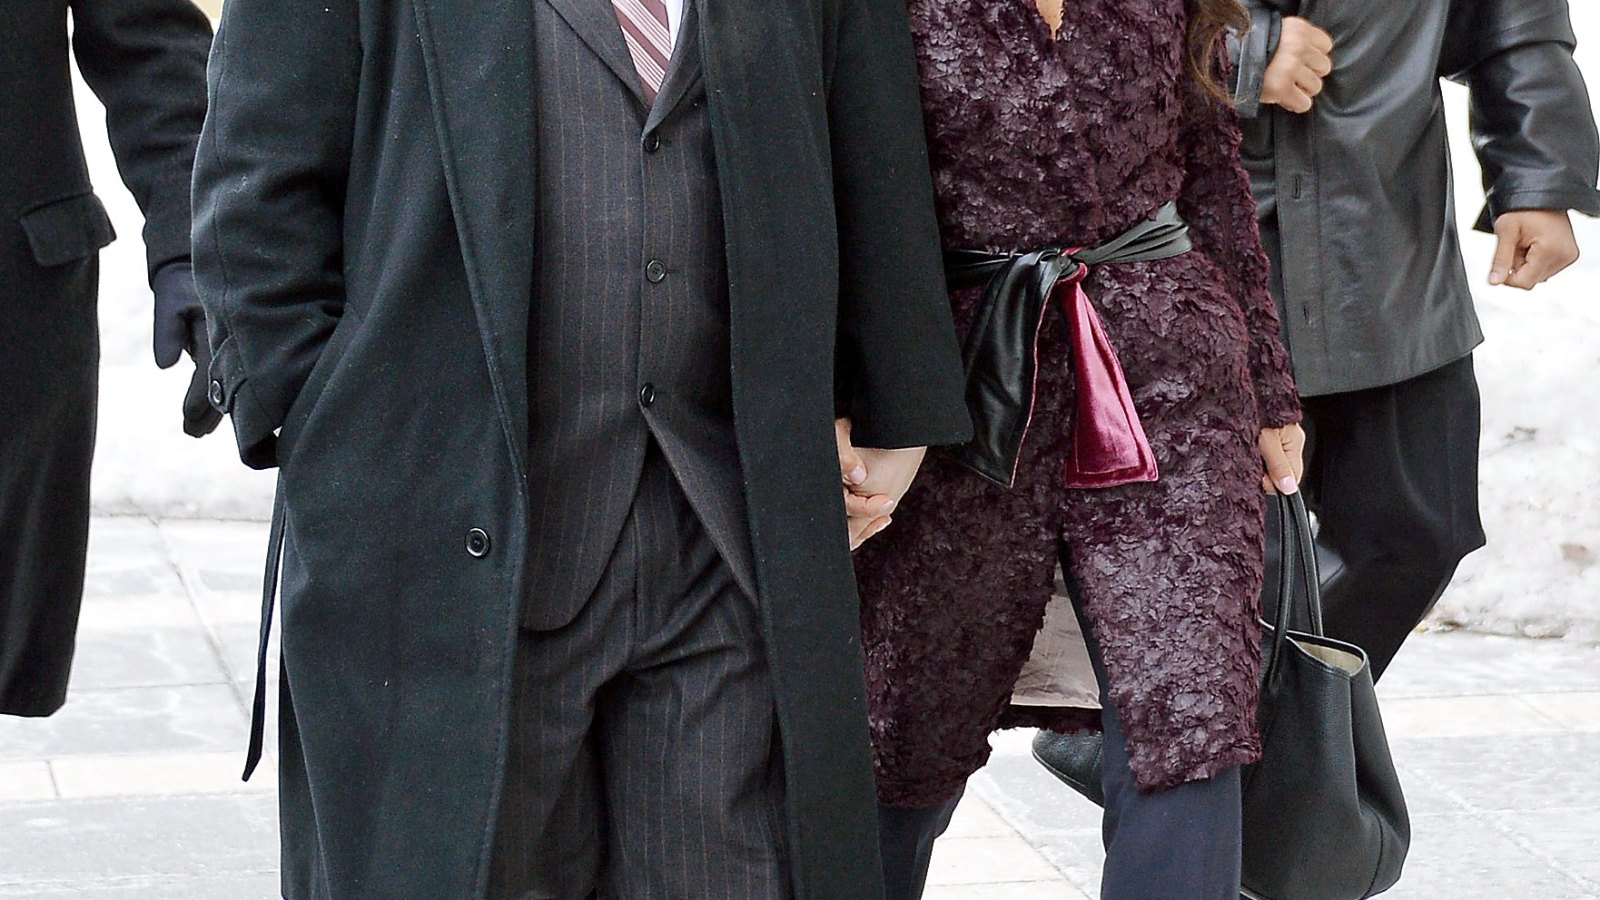 Joe and Teresa Giudice arrive at court in Newark, NJ on March 4, 2014